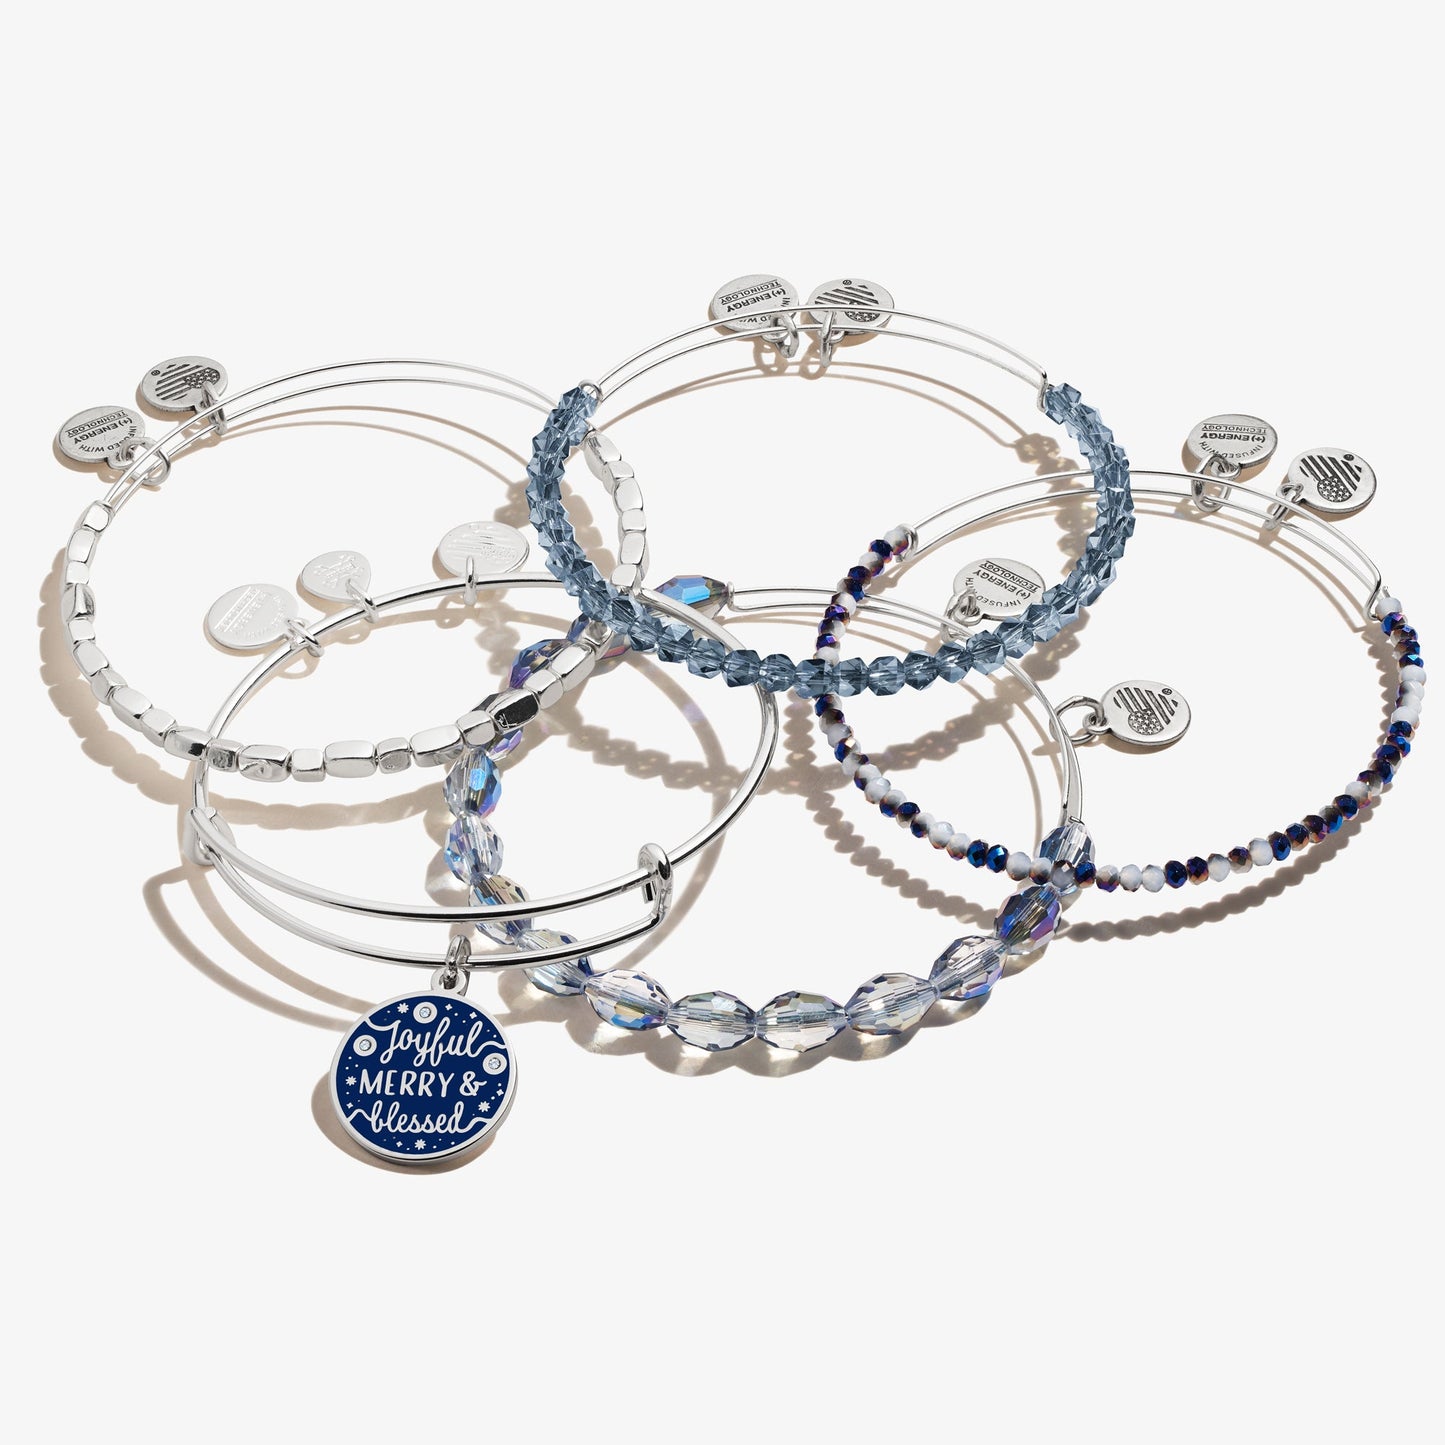 'Joyful, Merry & Blessed' Bracelets, Set of 5